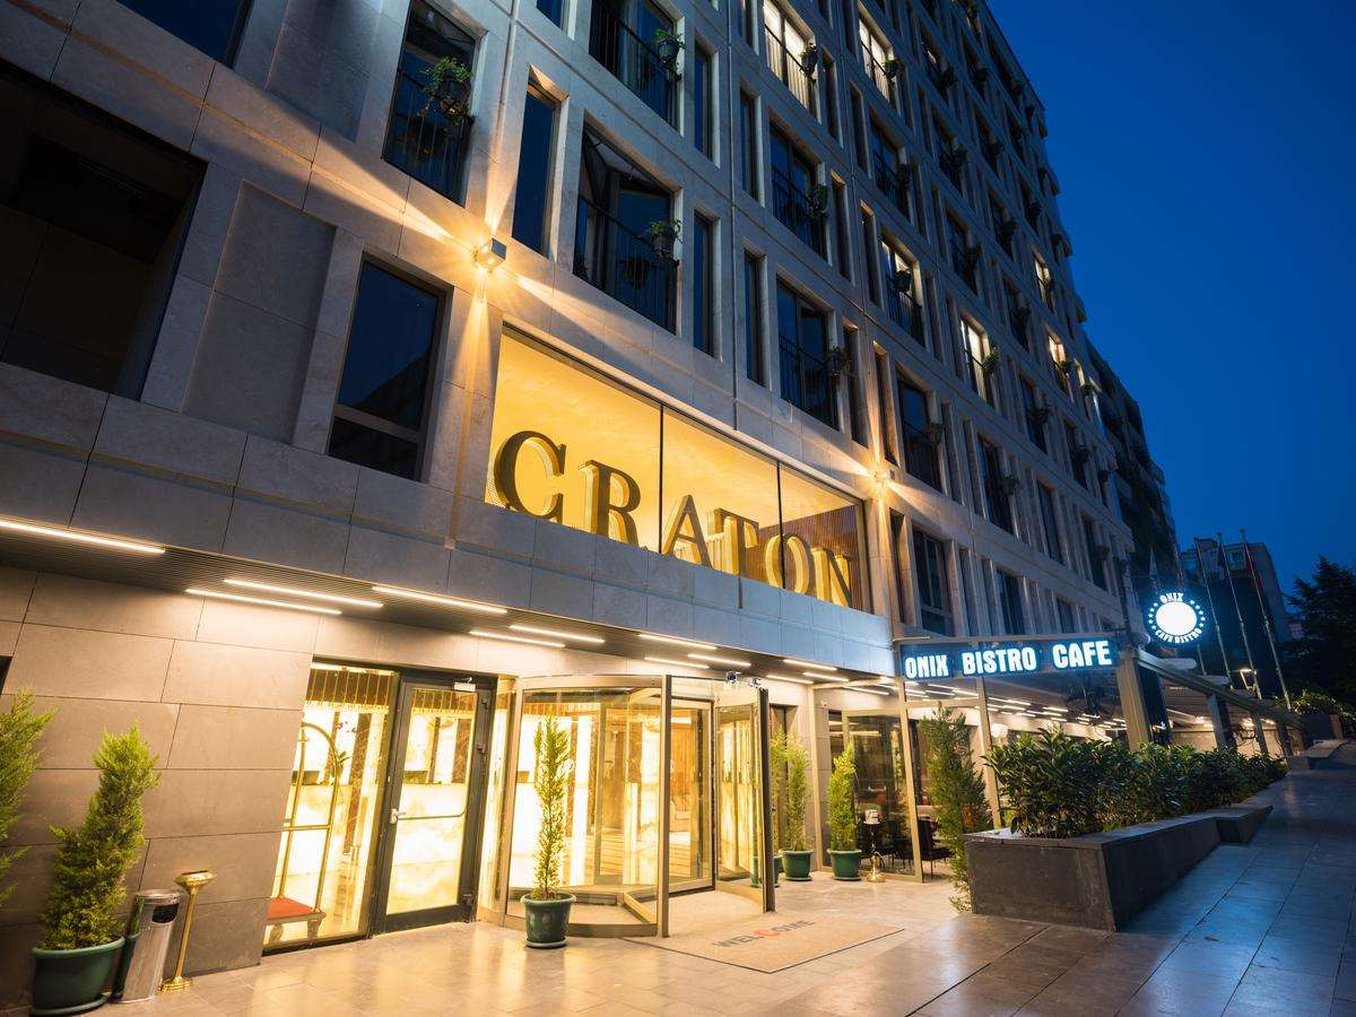 The Craton Hotel image